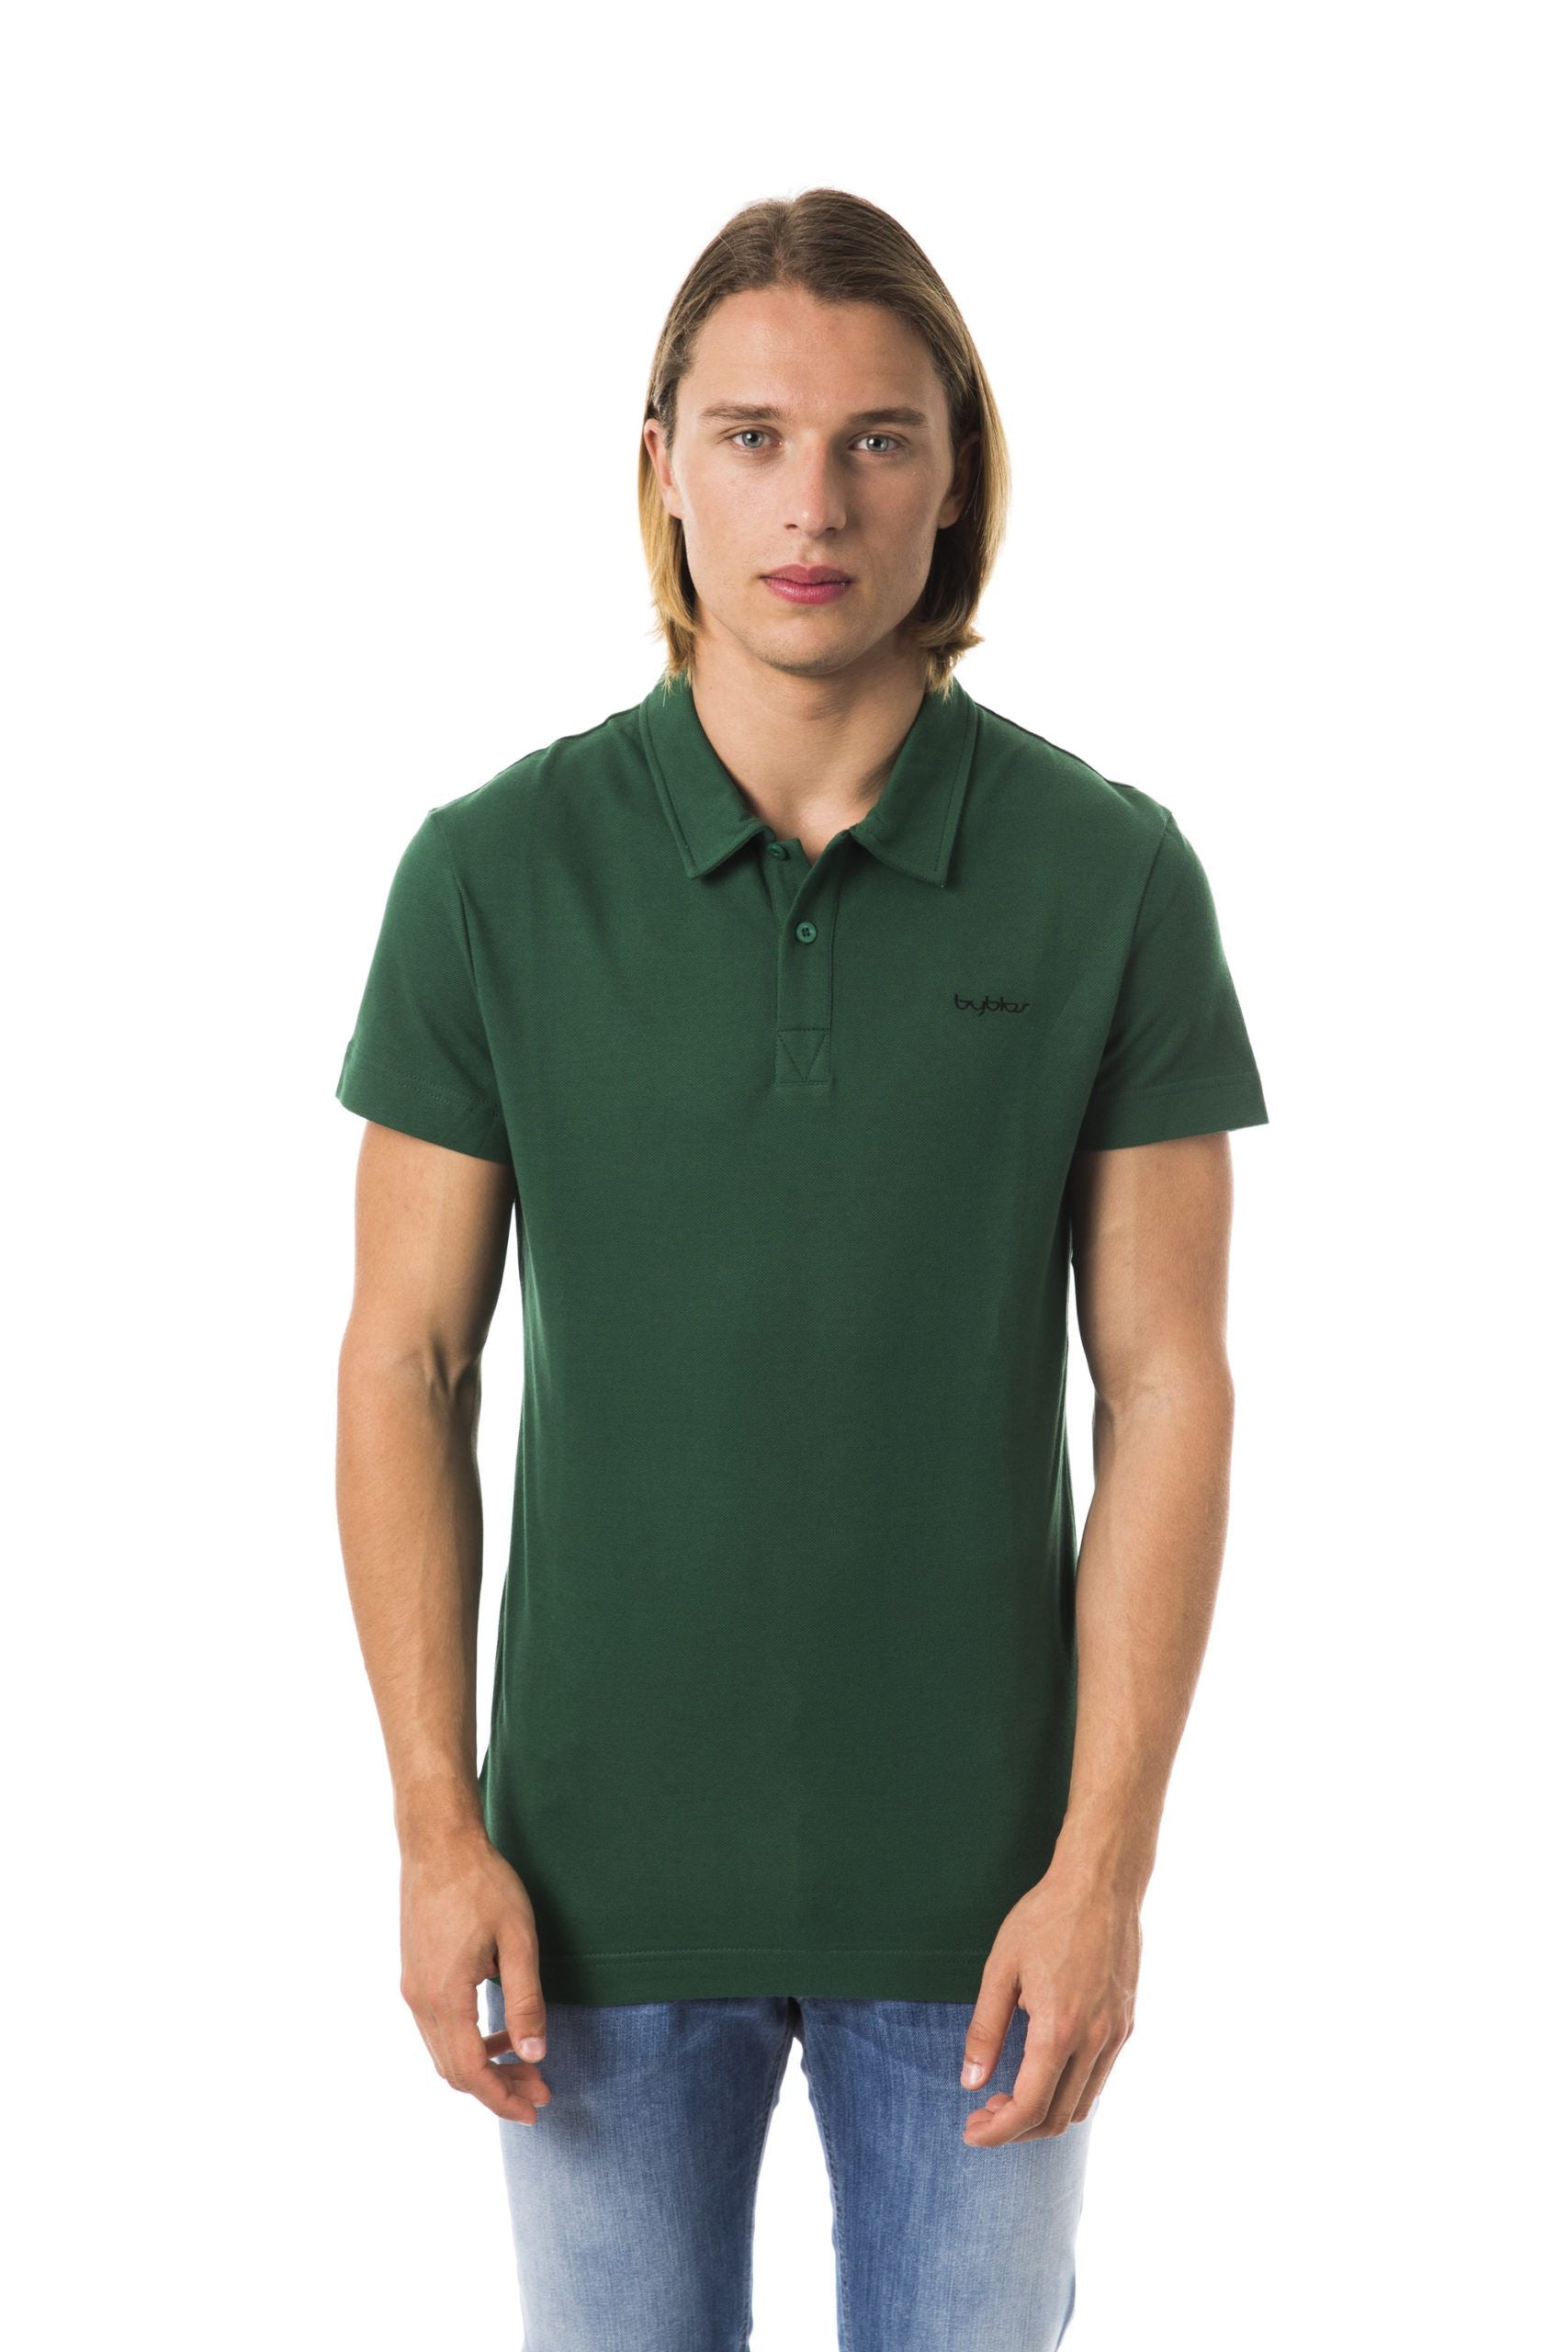 BYBLOS Green Cotton T-Shirt